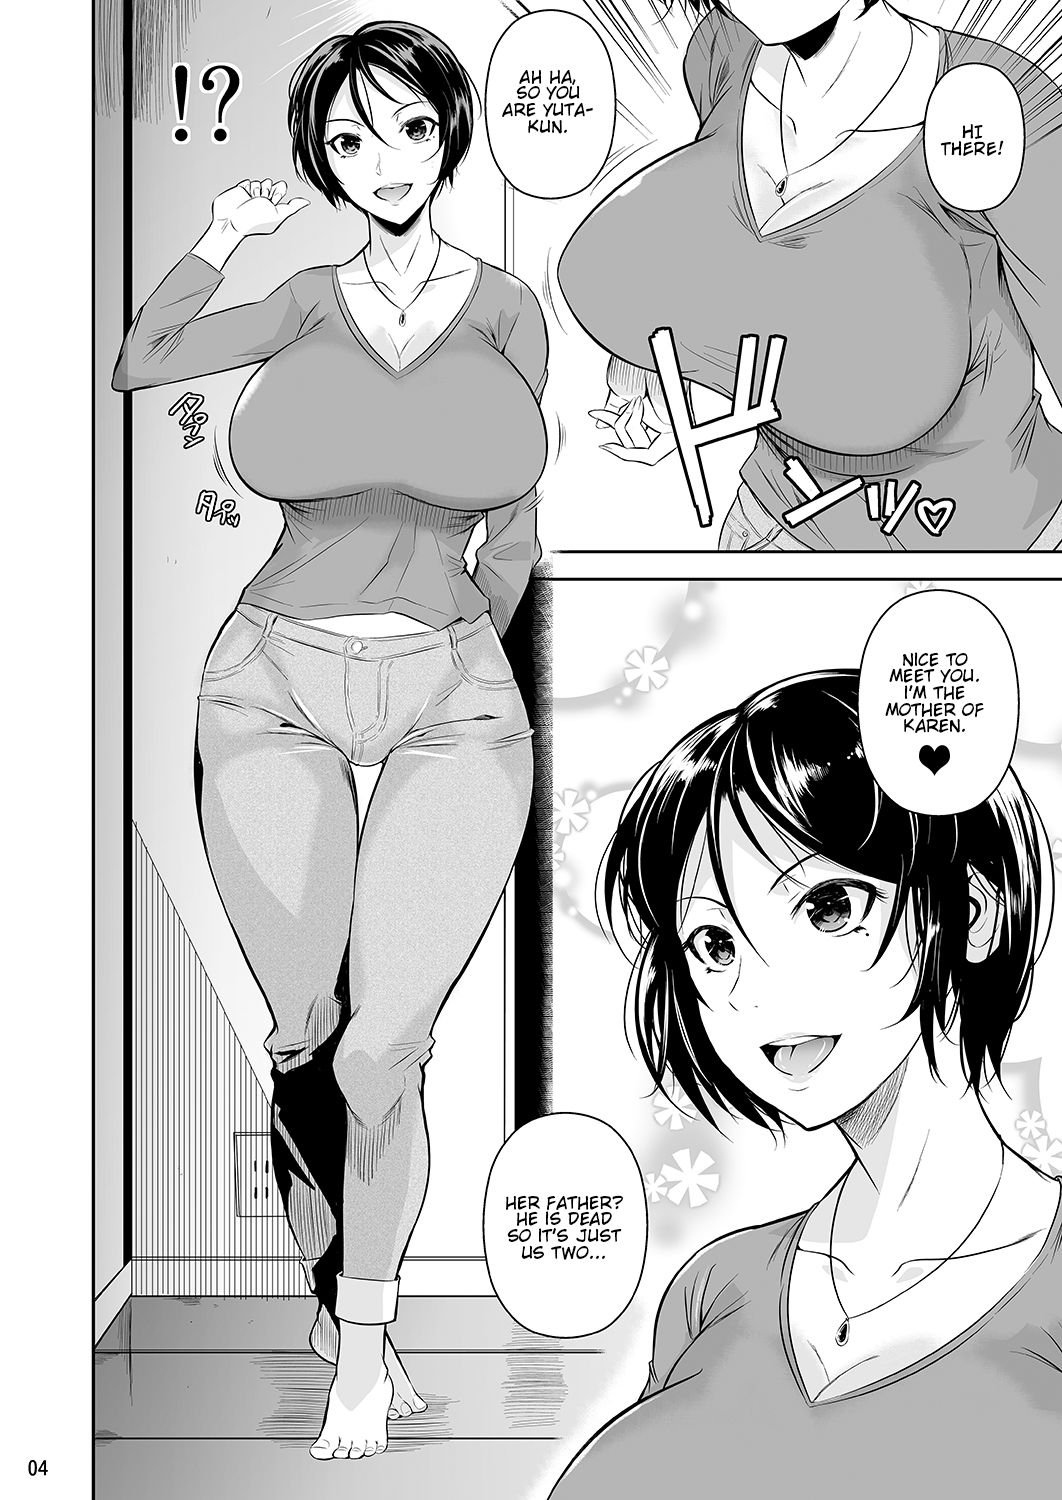 Batsu Game 3 - Horny teen boy fucks his girlfriends mom with his big cock - pervy comics image